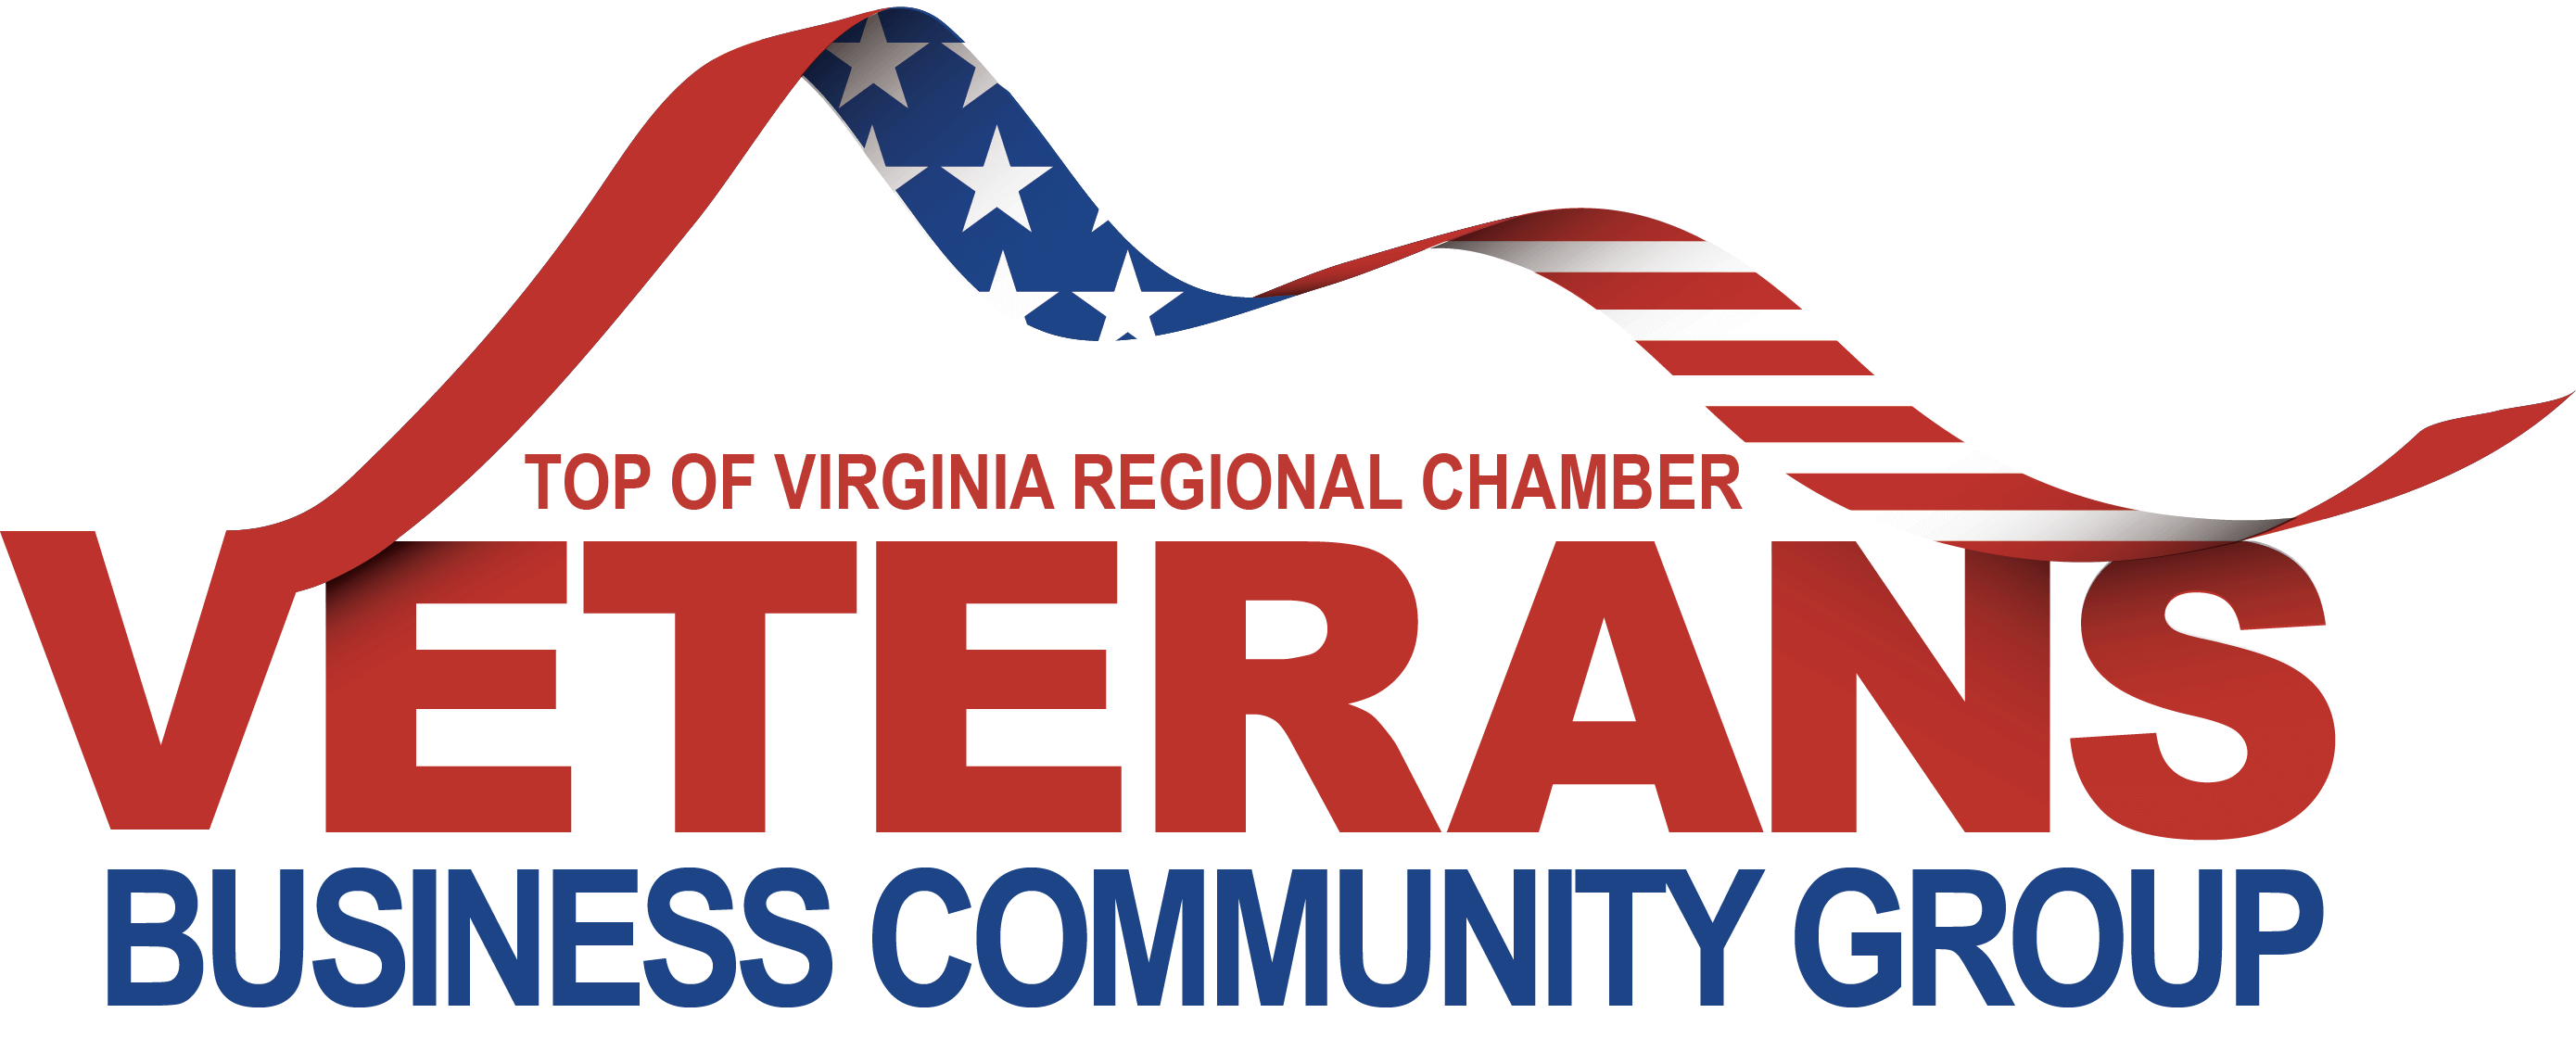 Veterans Business Community Group